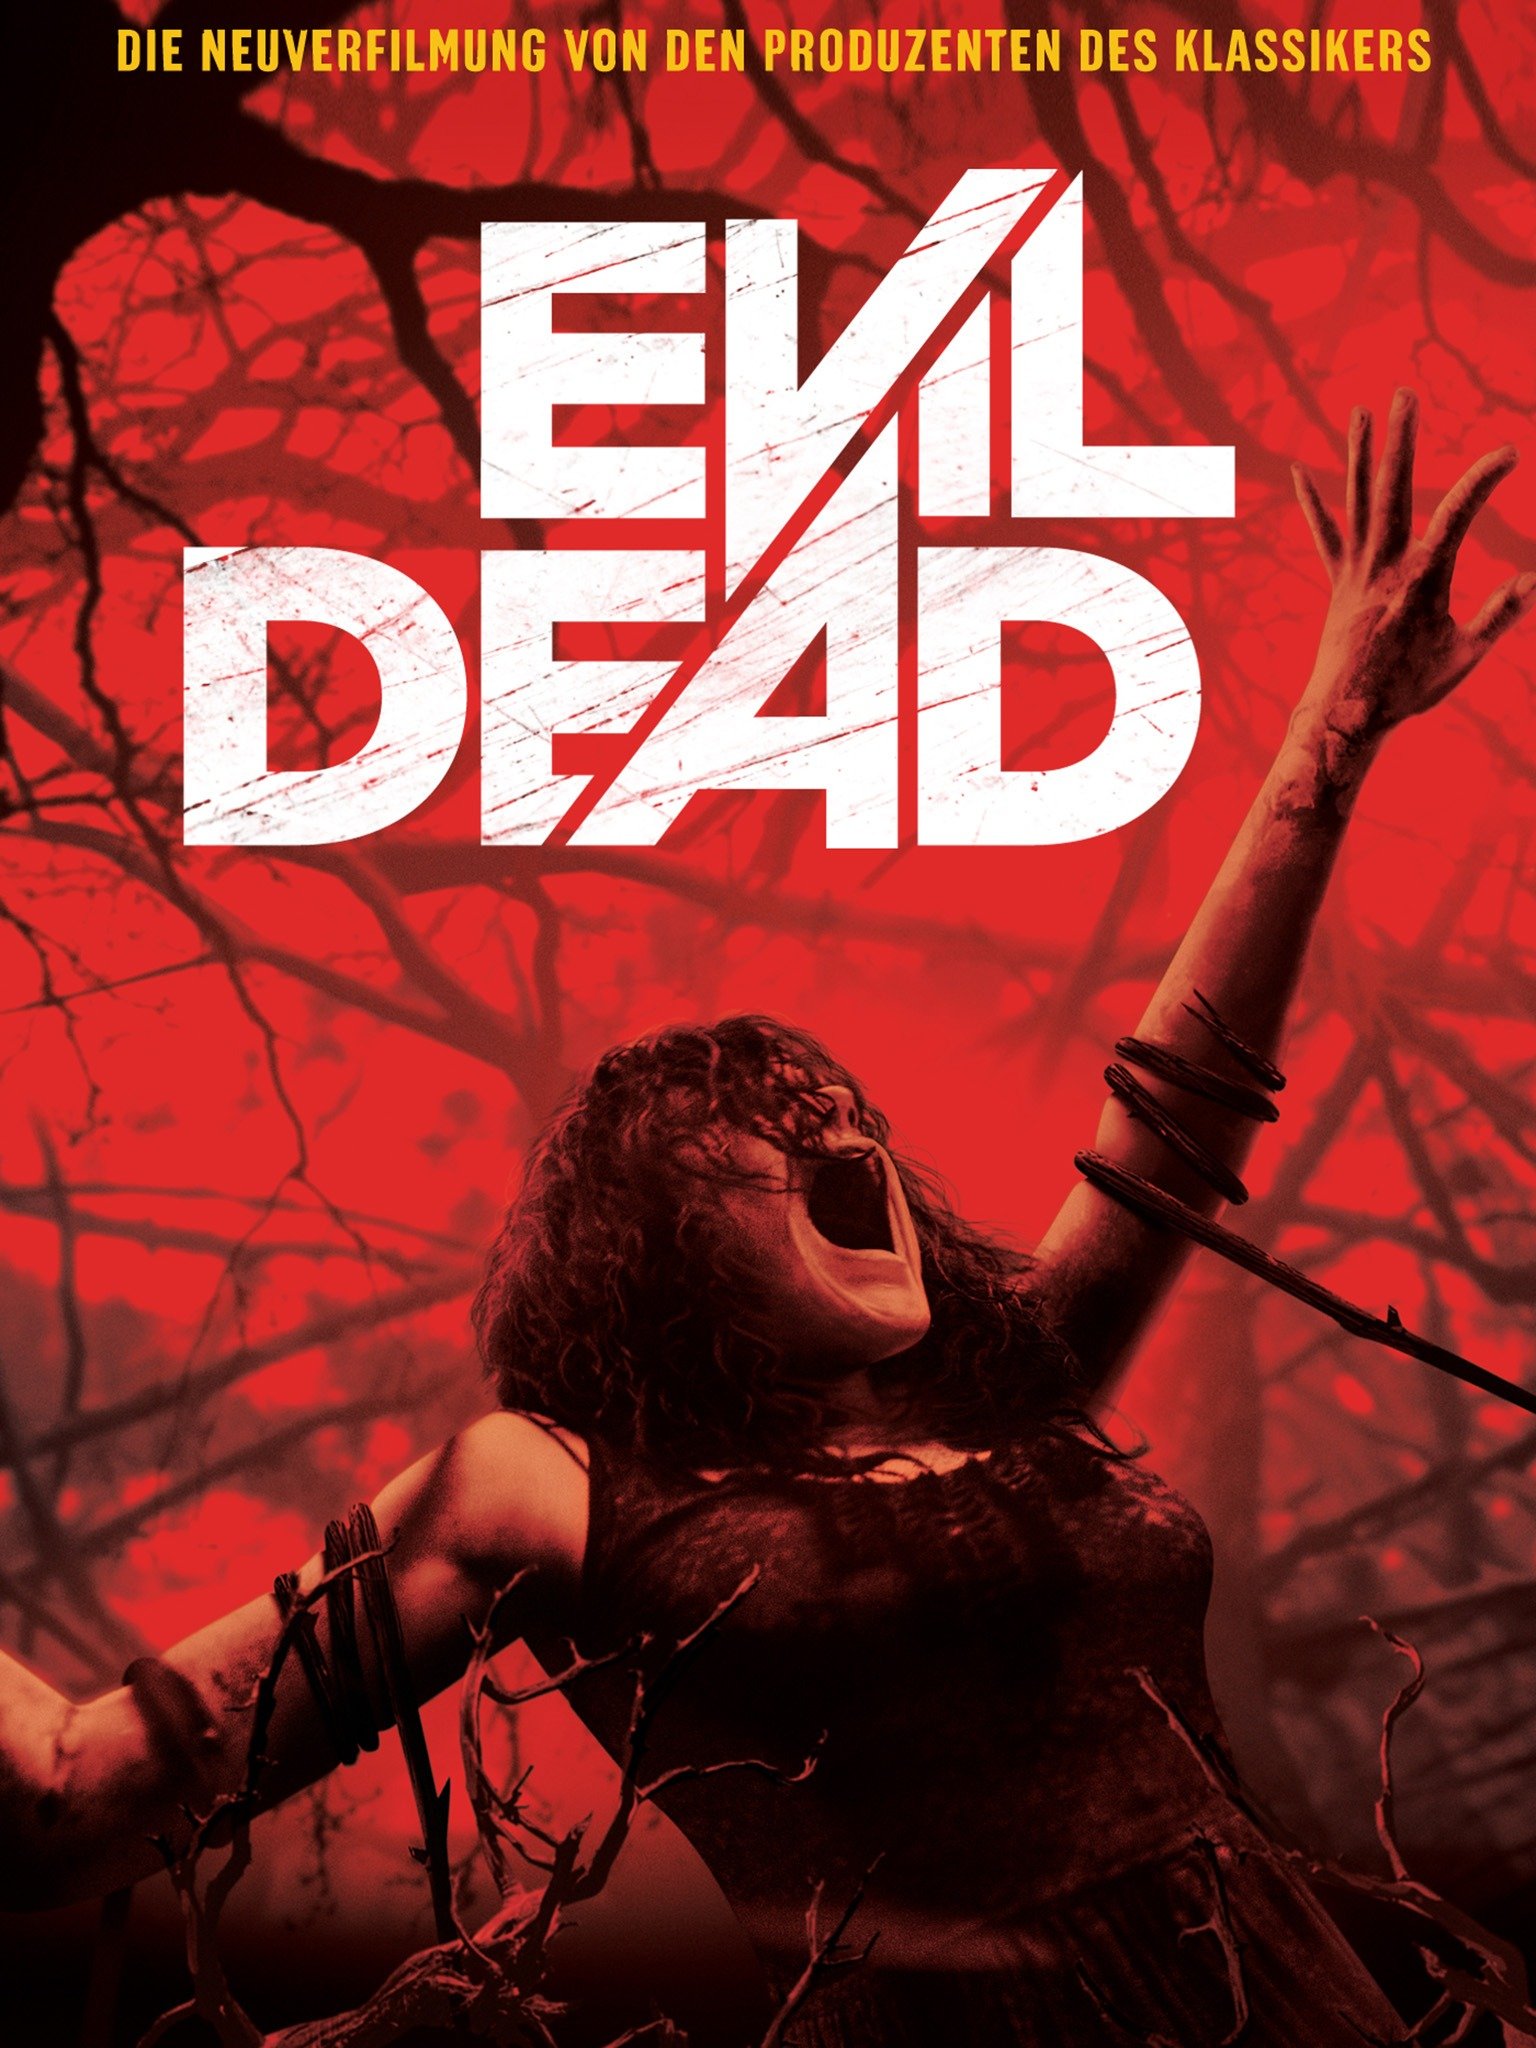 Stiahni si Filmy CZ/SK dabing Lesni duch / Evil Dead (2013)(CZ)[1080p] = CSFD 59%